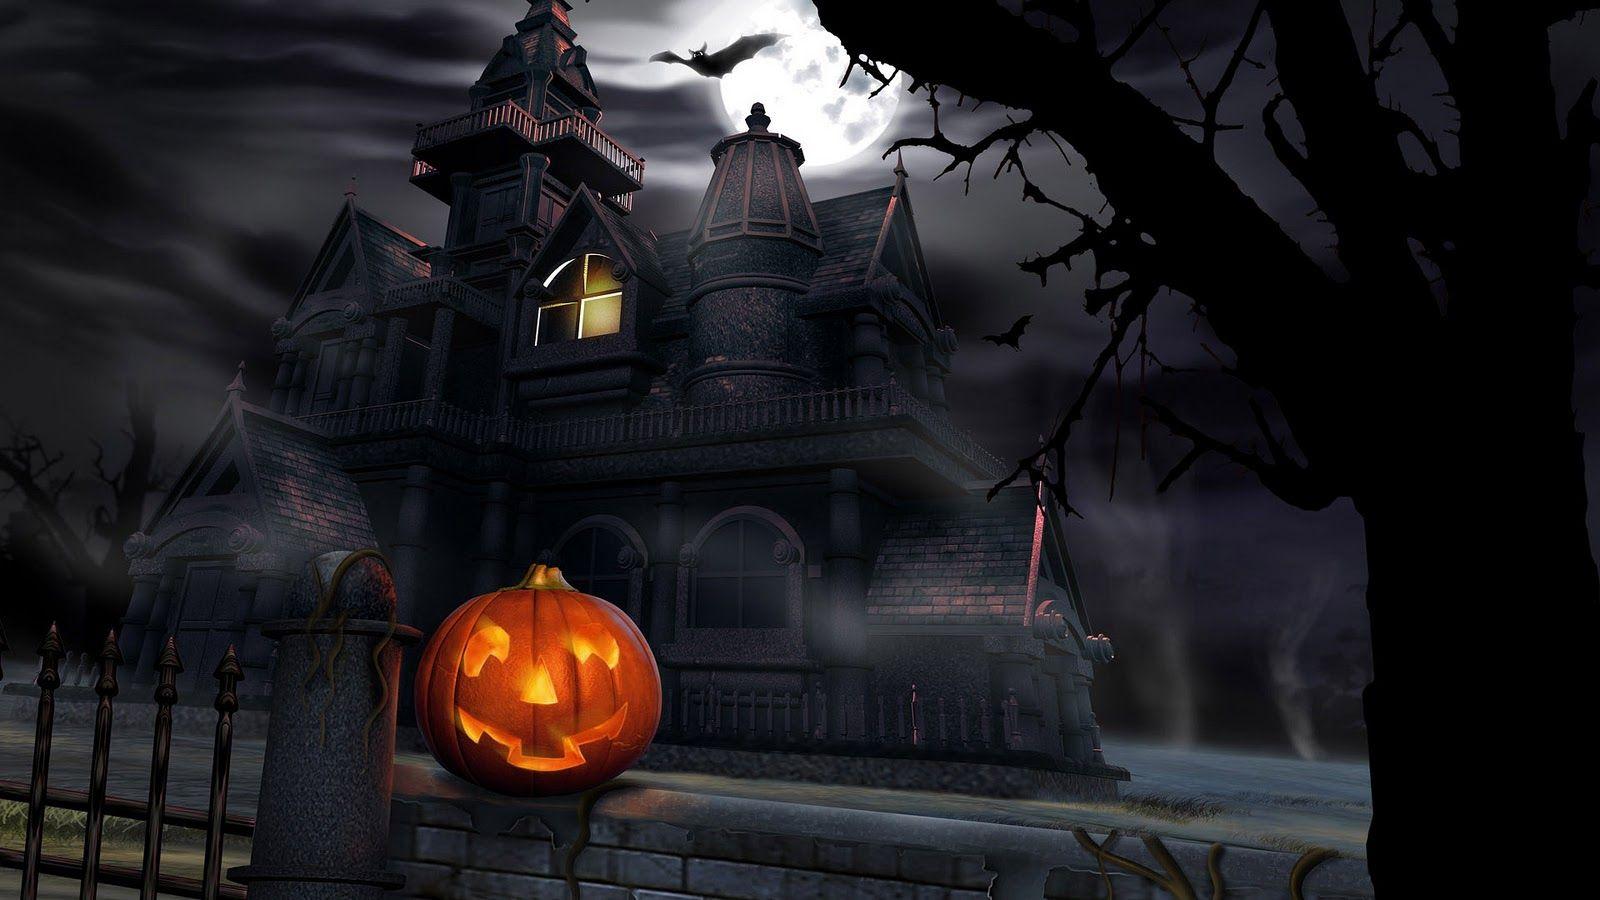 Halloween Scary Animated Desktop Wallpaper. Free halloween wallpaper, Halloween desktop wallpaper, Halloween picture